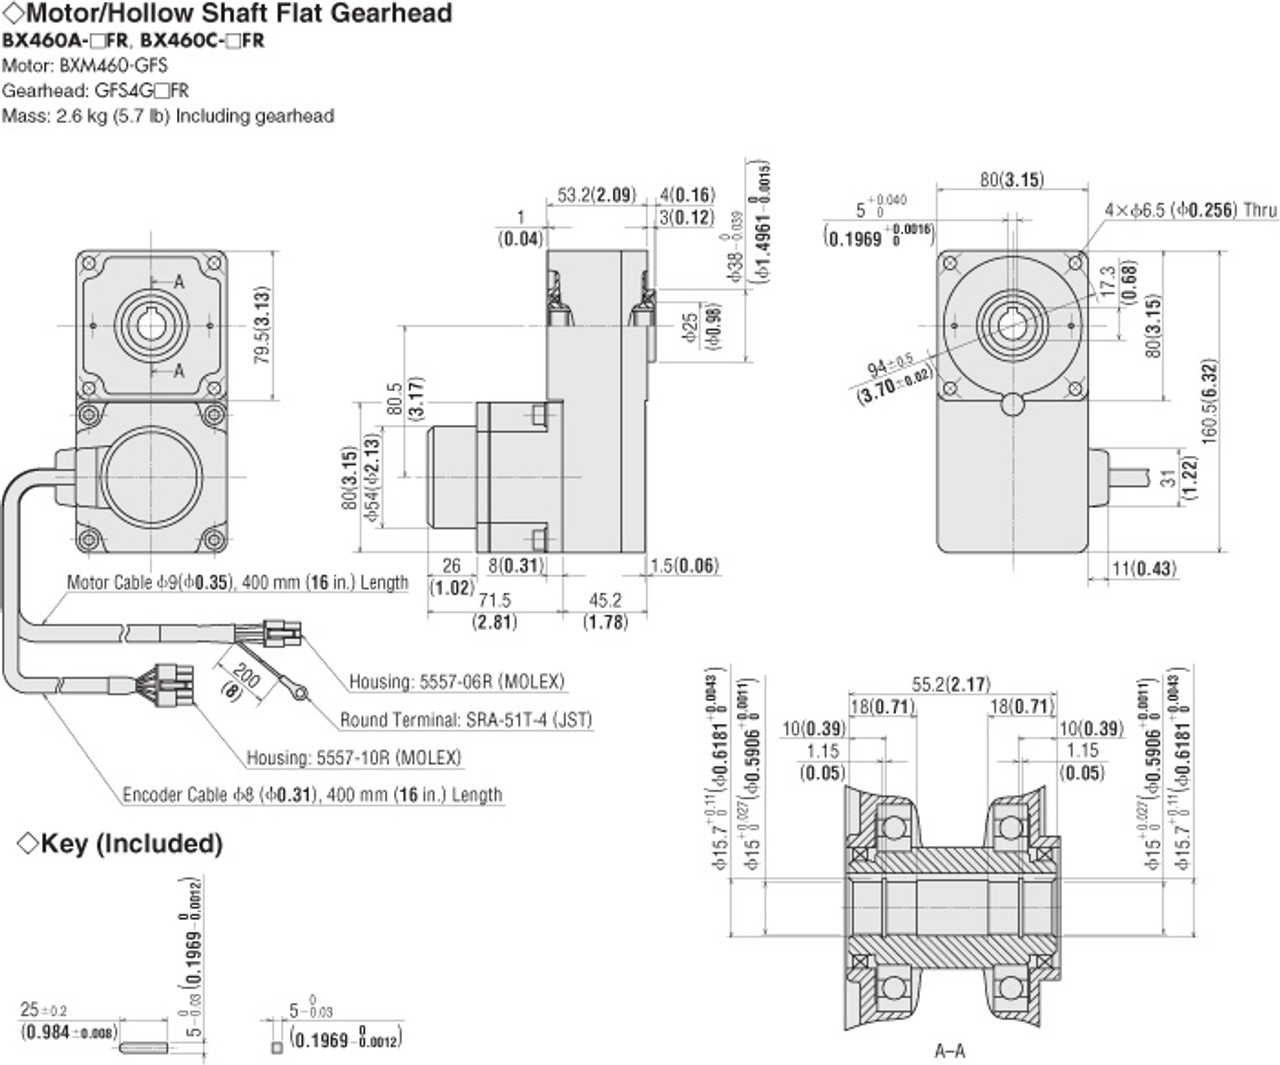 BXM460-GFS / GFS4G100FR - Dimensions